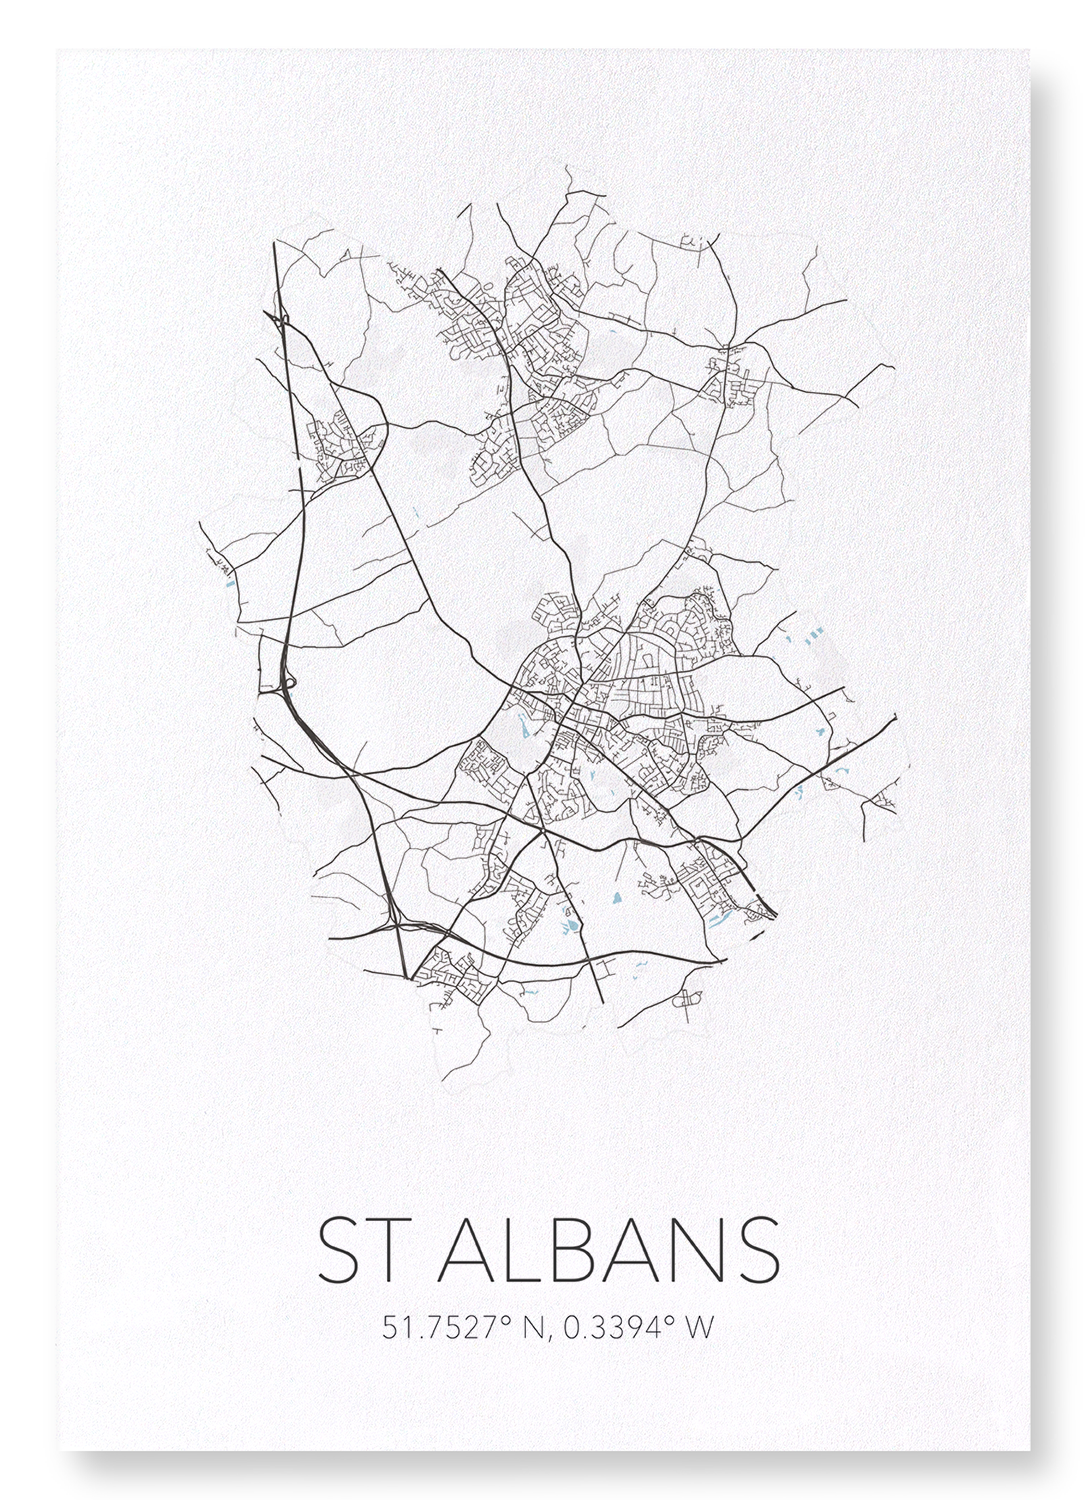 ST. ALBANS CUTOUT: Map Cutout Art Print